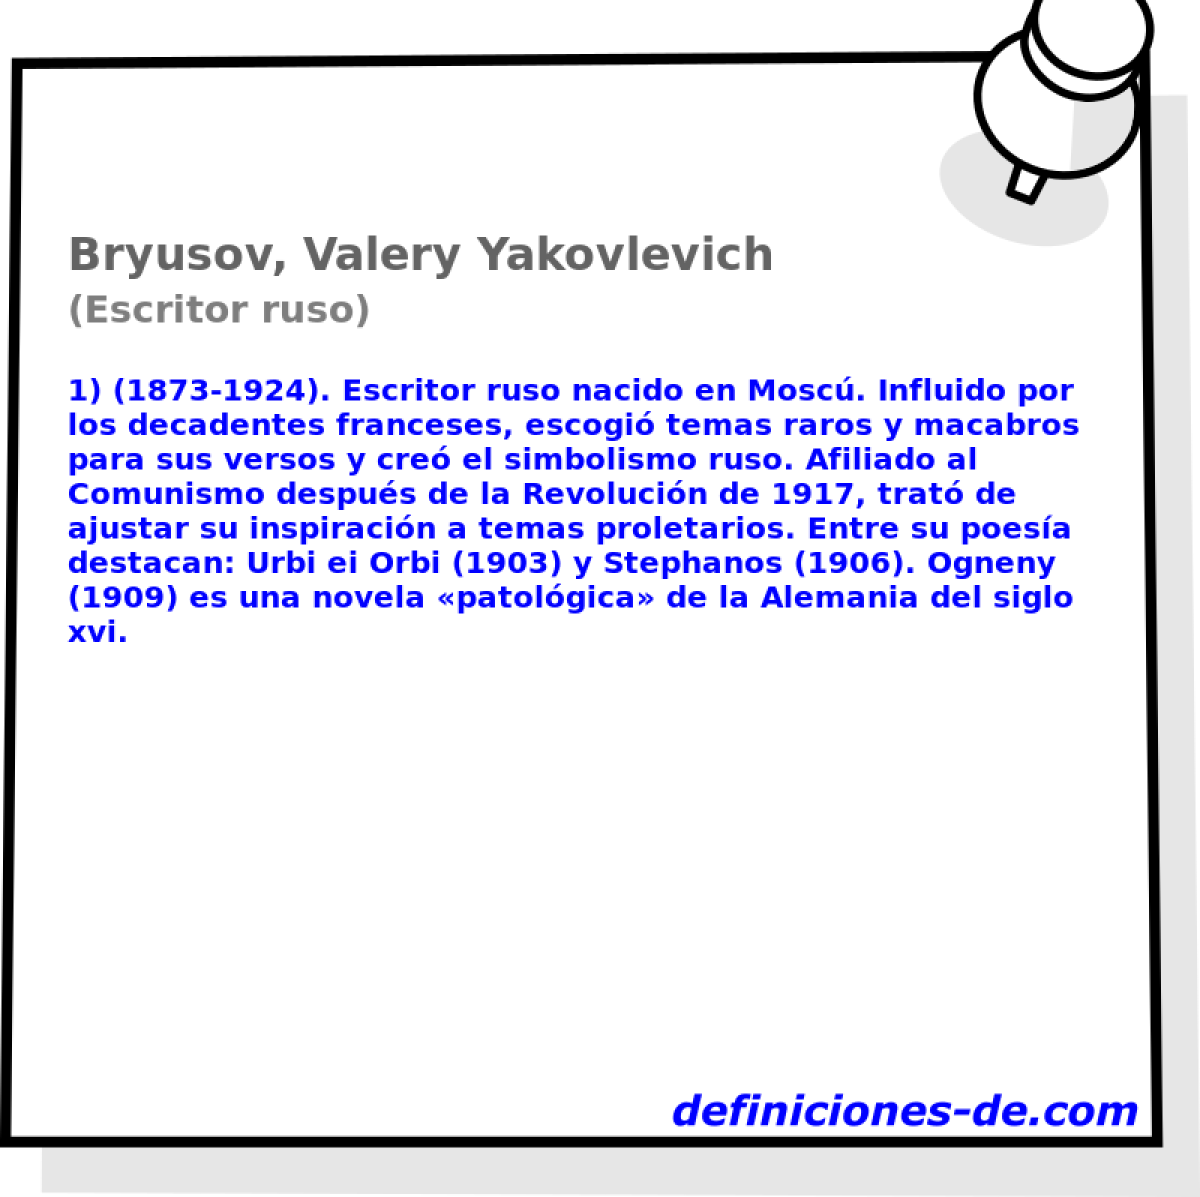 Bryusov, Valery Yakovlevich (Escritor ruso)